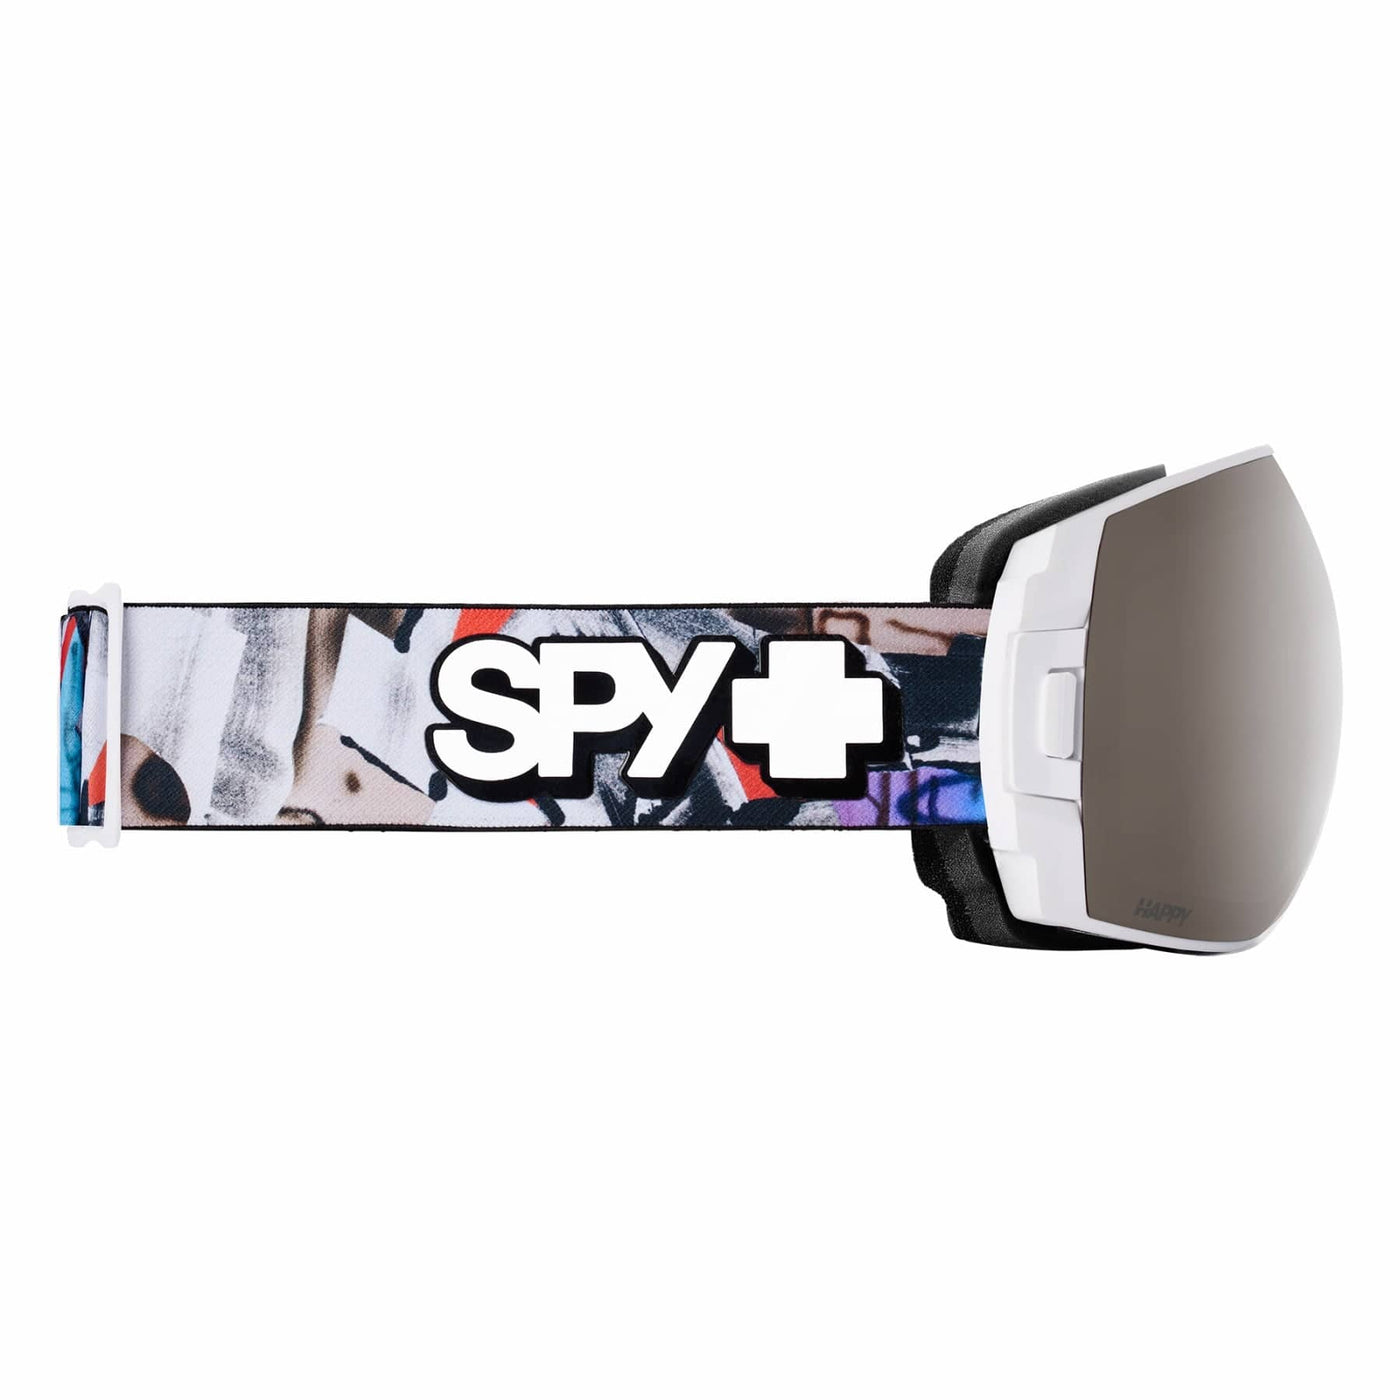 SPY Legacy SE Carlson Snow Goggles